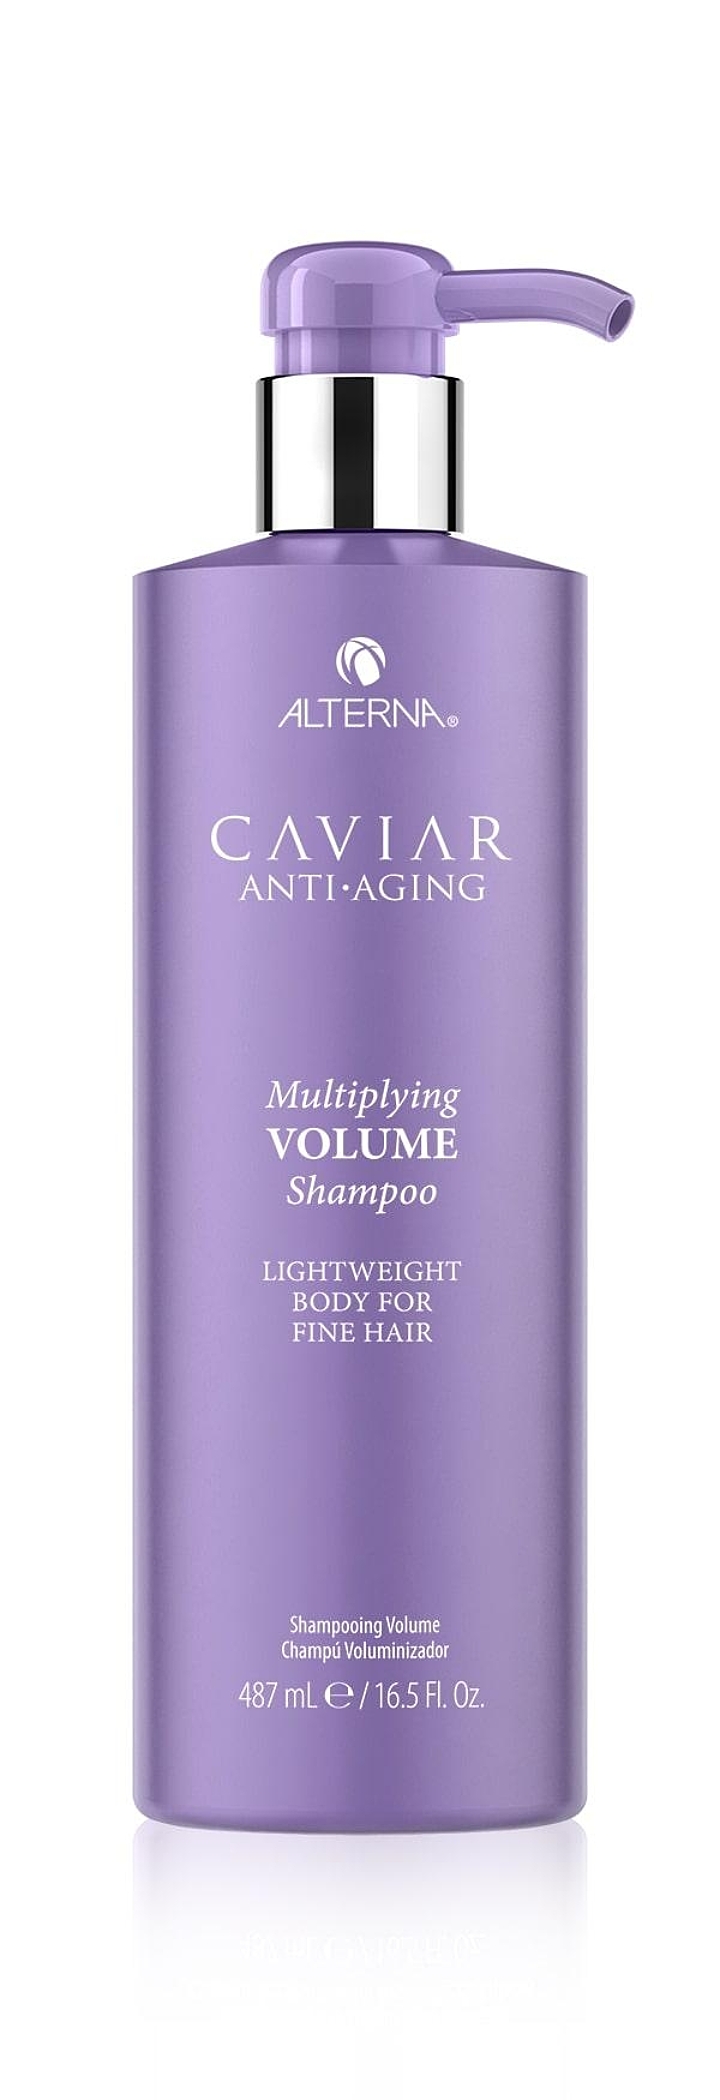 Caviar Anti-Aging MULTIPLYING VOLUME Shampoo 16.5oz